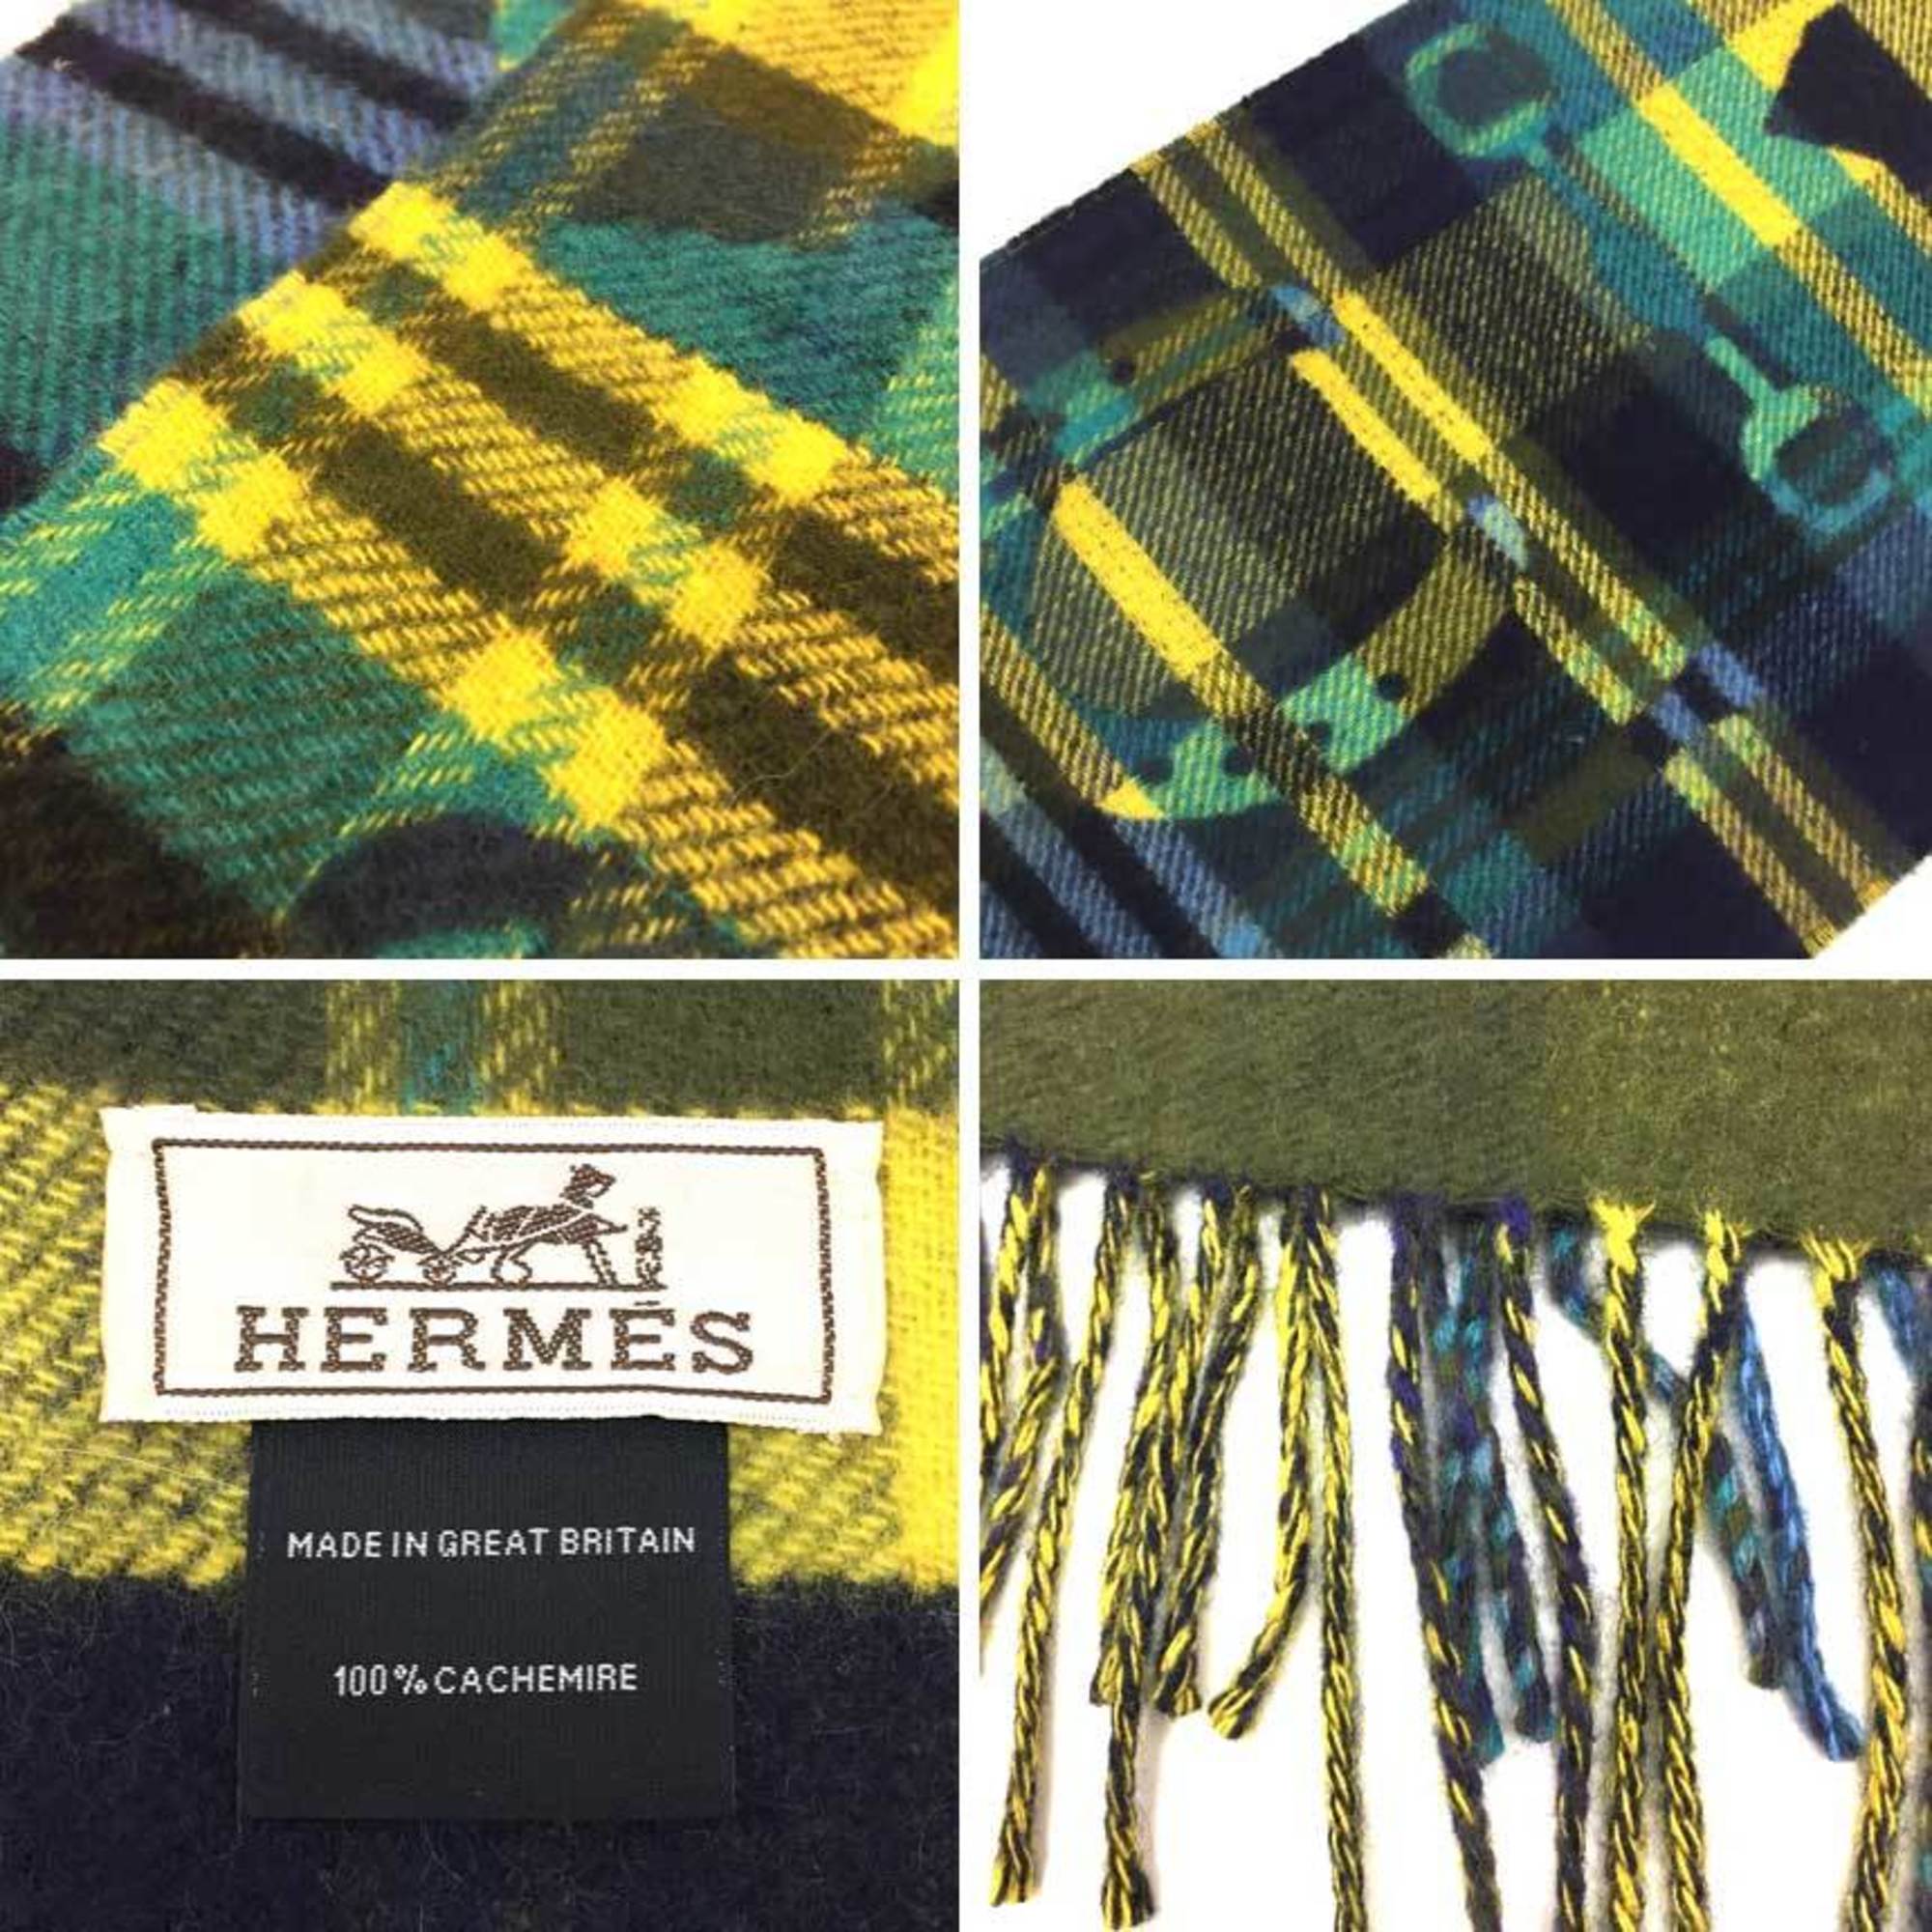 HERMES Men's Scarf Tartan Check Echarpe HER-MES 100% Cashmere Yellow x Blue 2020 Women's Hermes Muffler aq9411